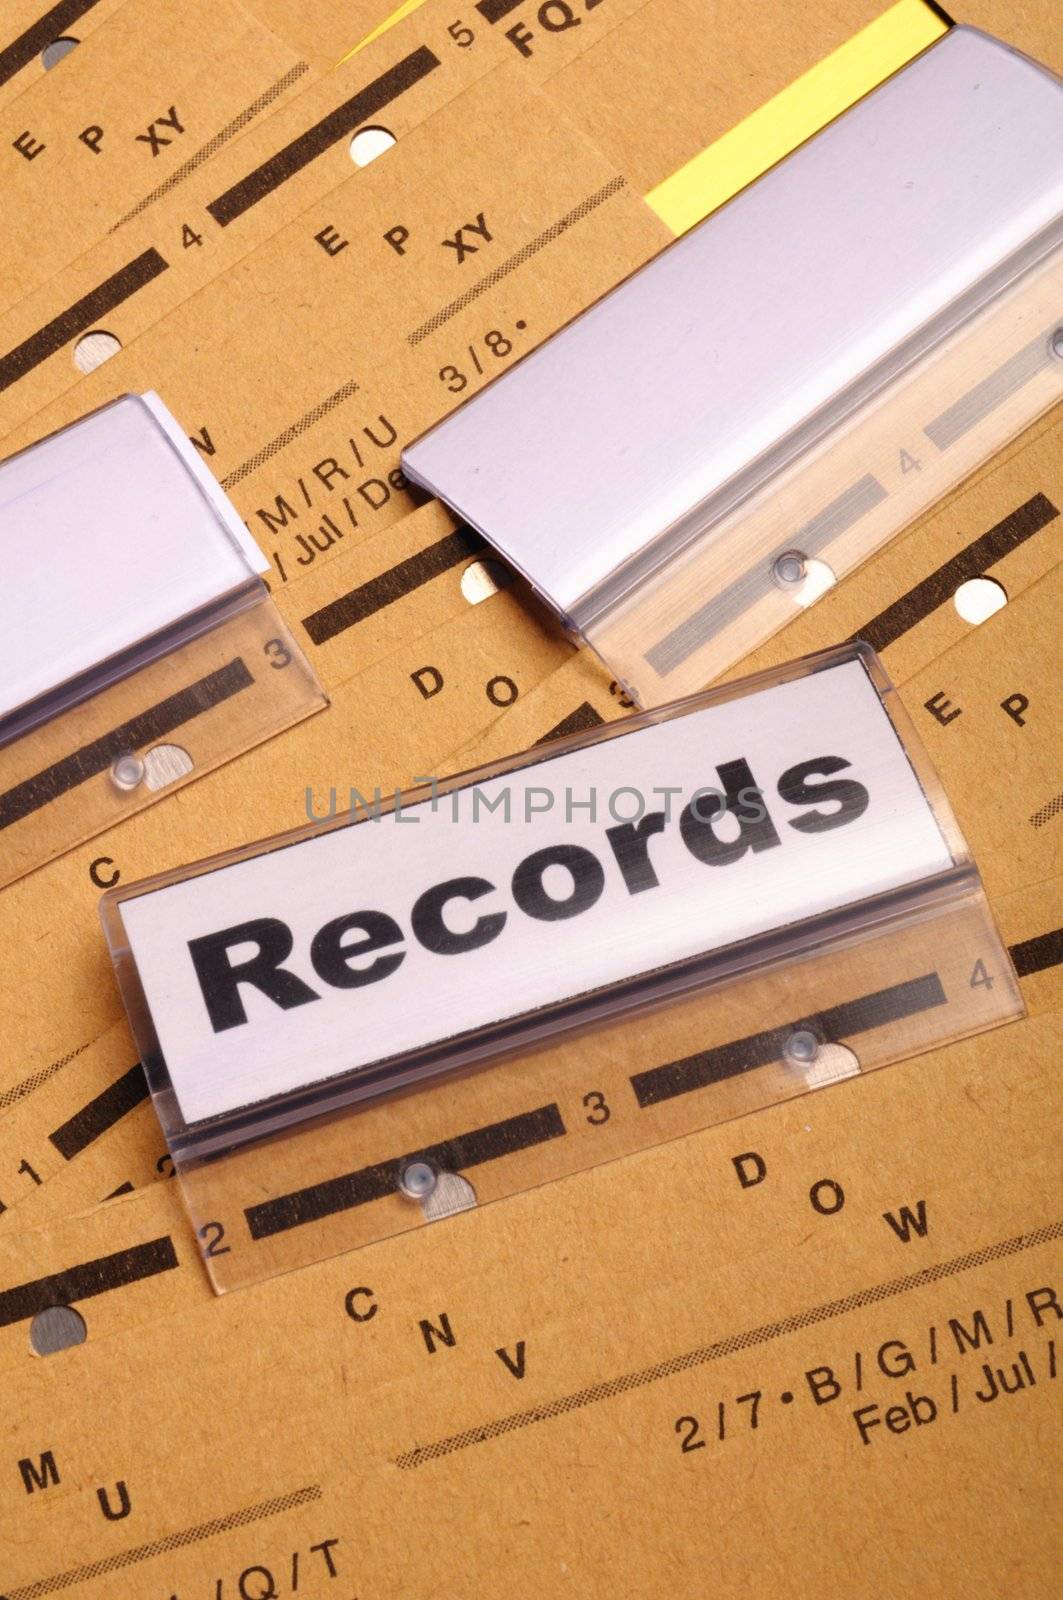 records by gunnar3000